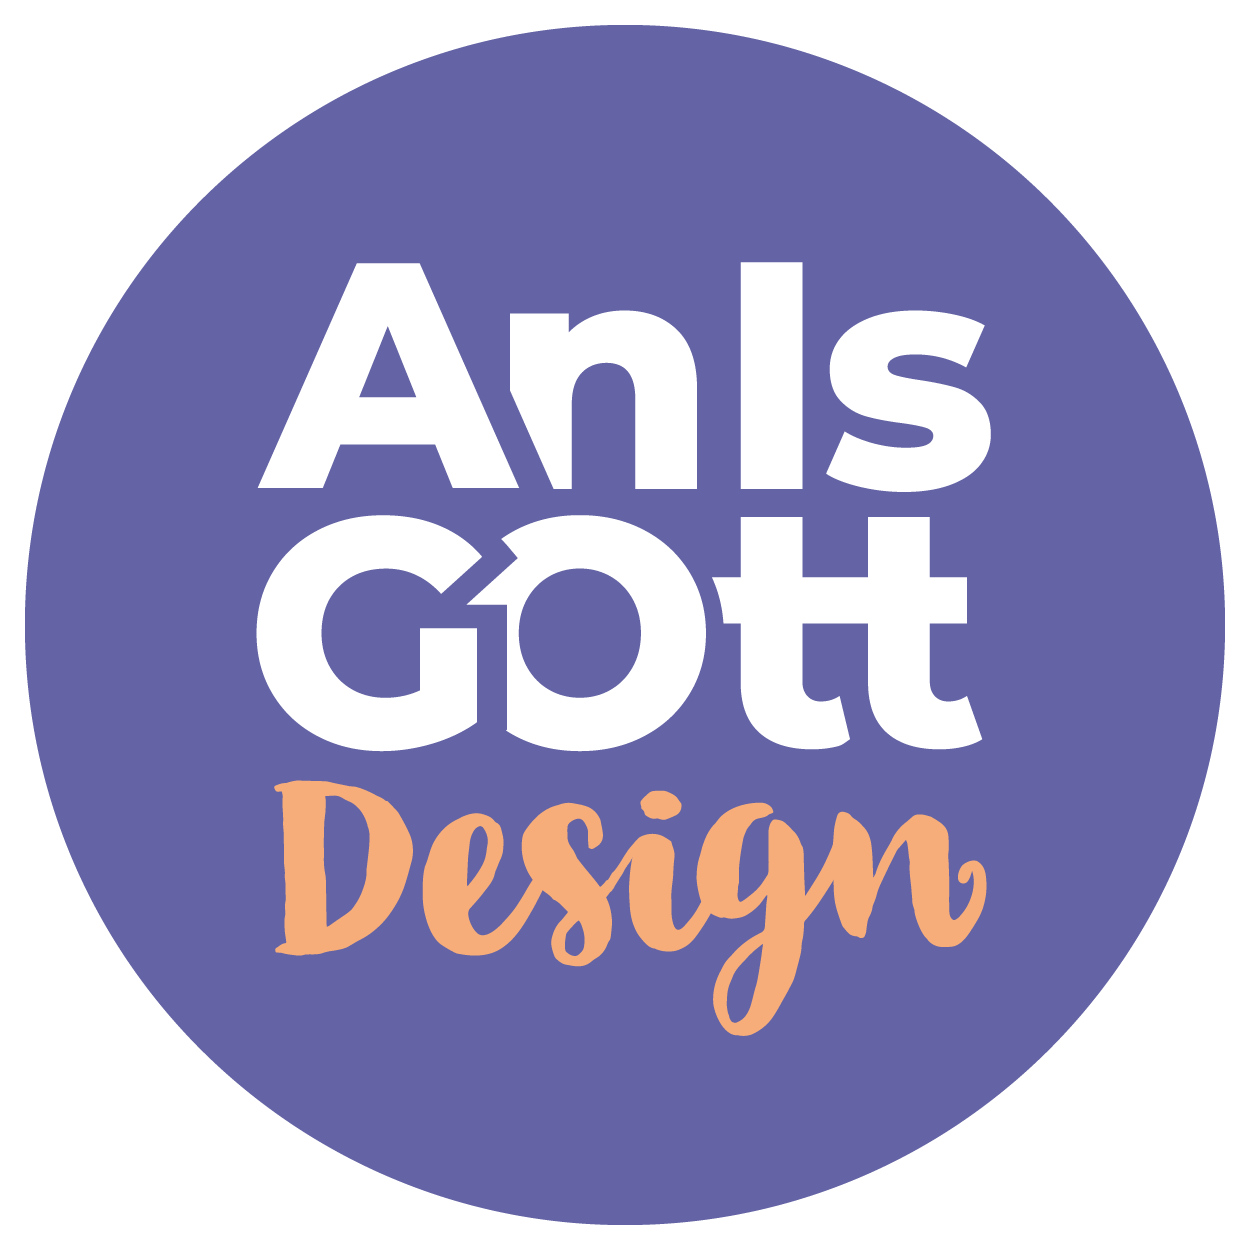 AnIsGOtt Design